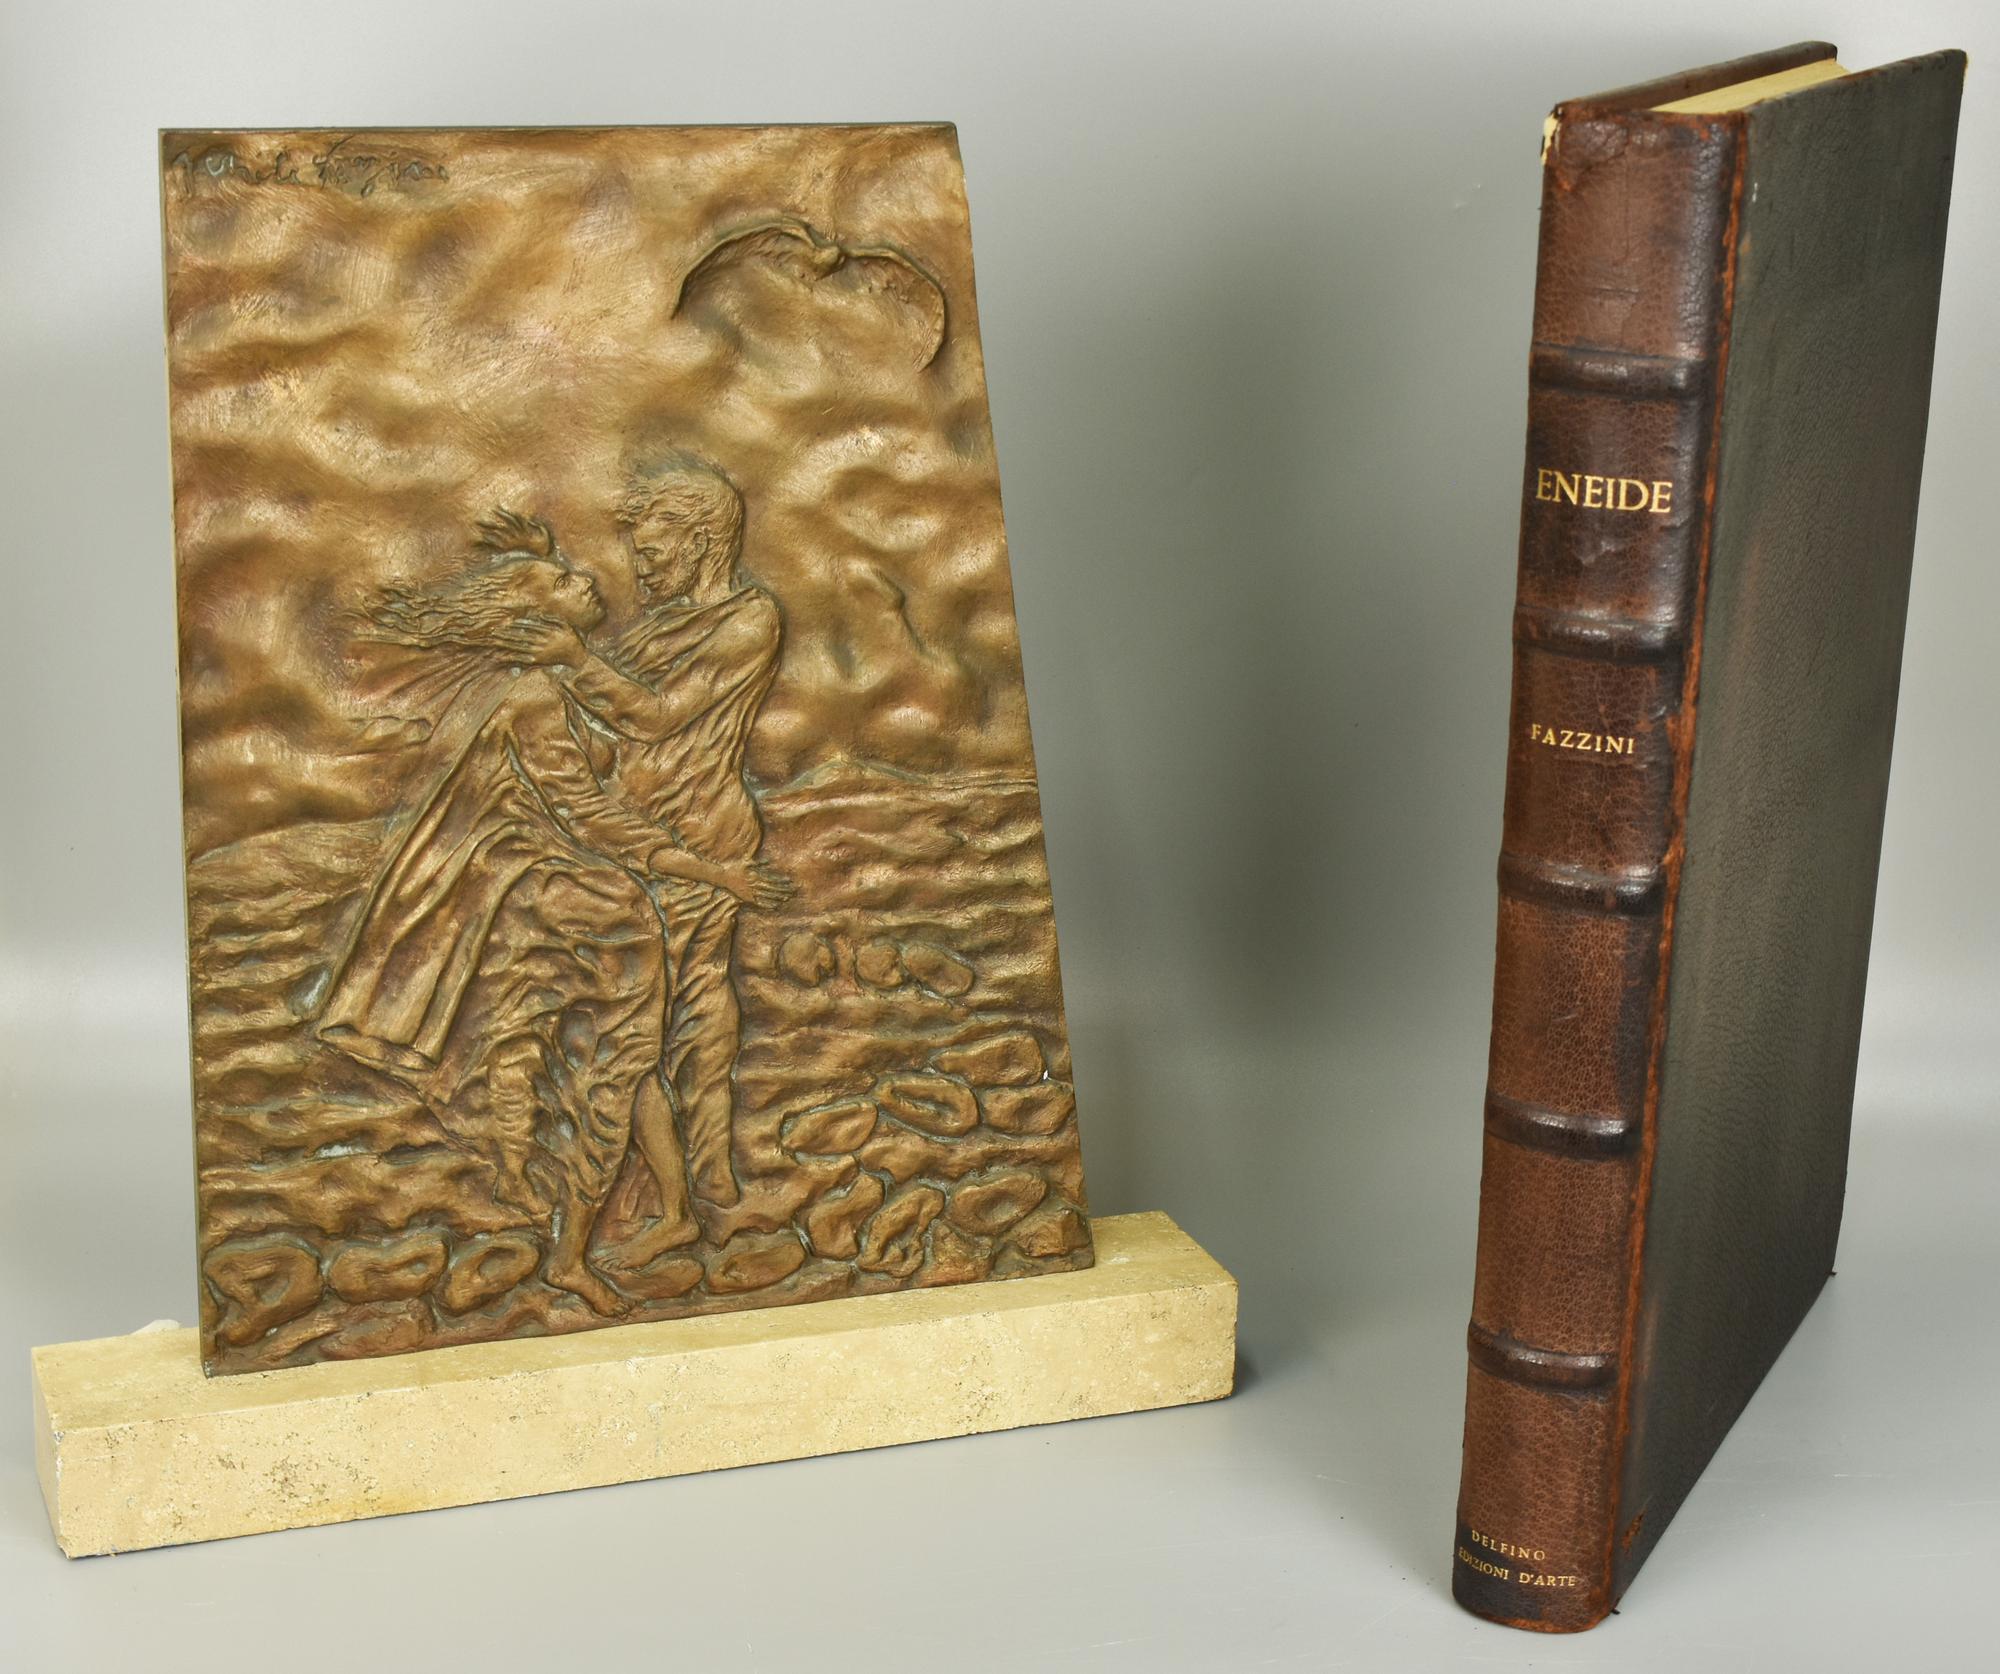 Pericle Fazzini ENEIDE bronzo, marmo e volume, cm 51x35x5,5; es. 207/1.250...